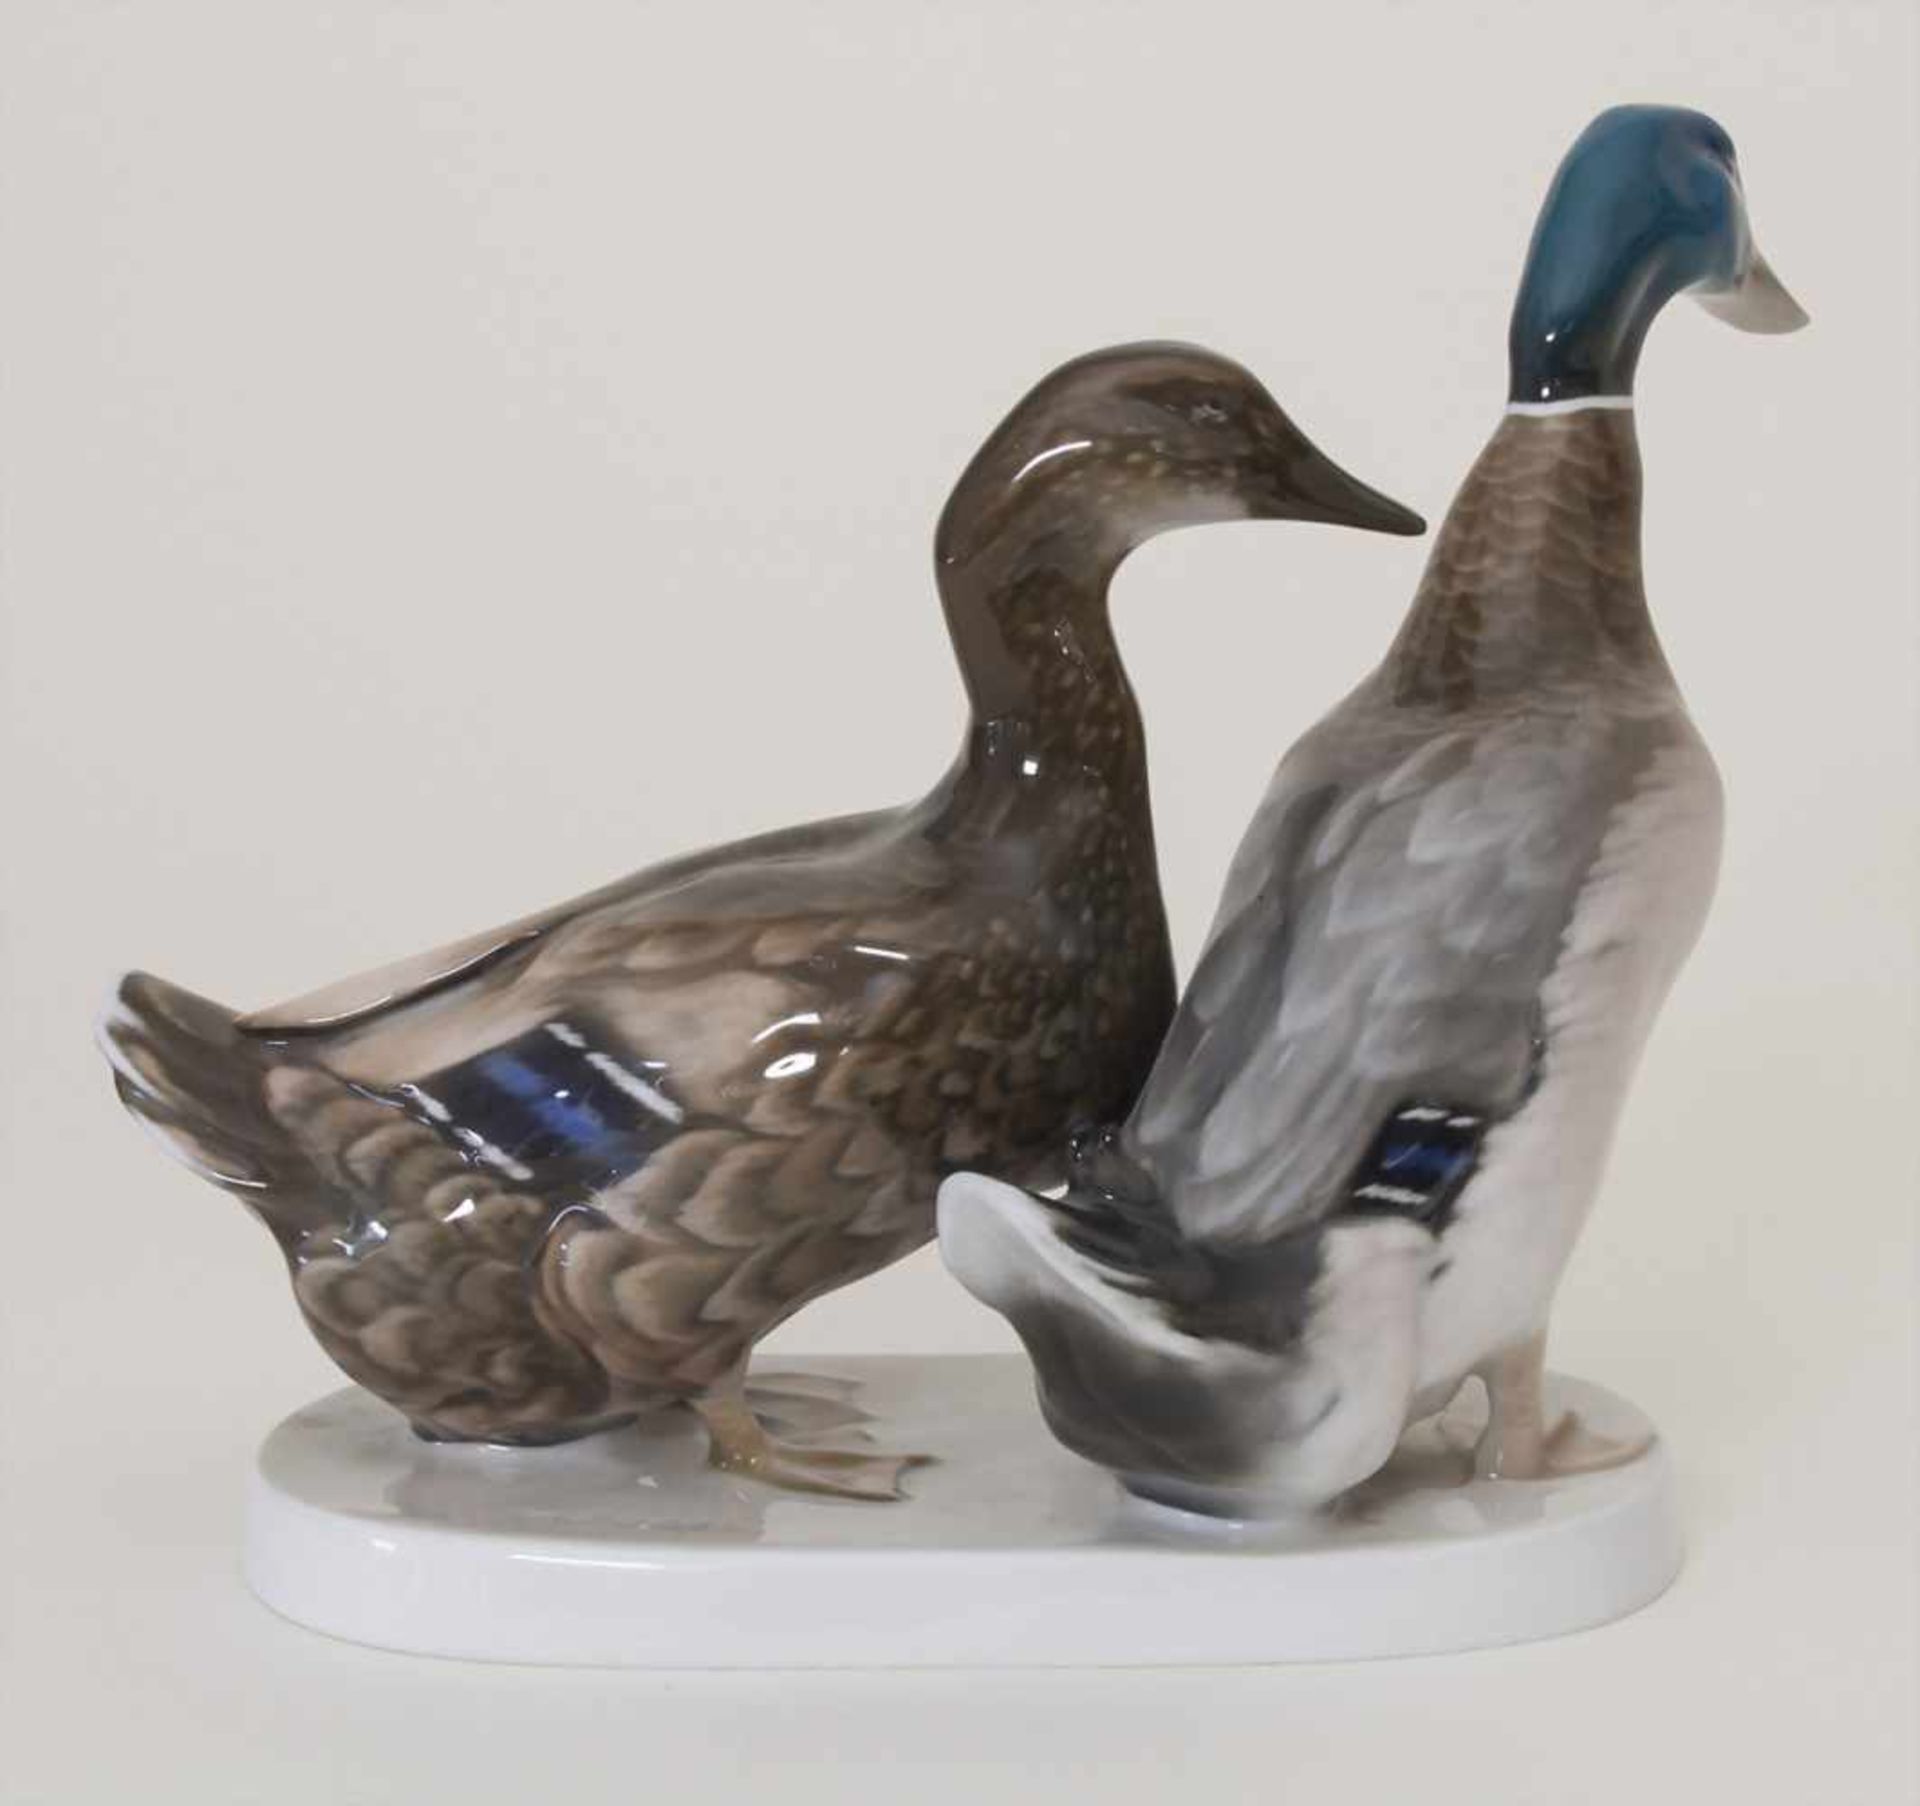 Tierfiguren 'Entenpaar' / A duck couple, Willy Zügel für Rosenthal, nach 1974Material: Porzellan, - Bild 2 aus 8